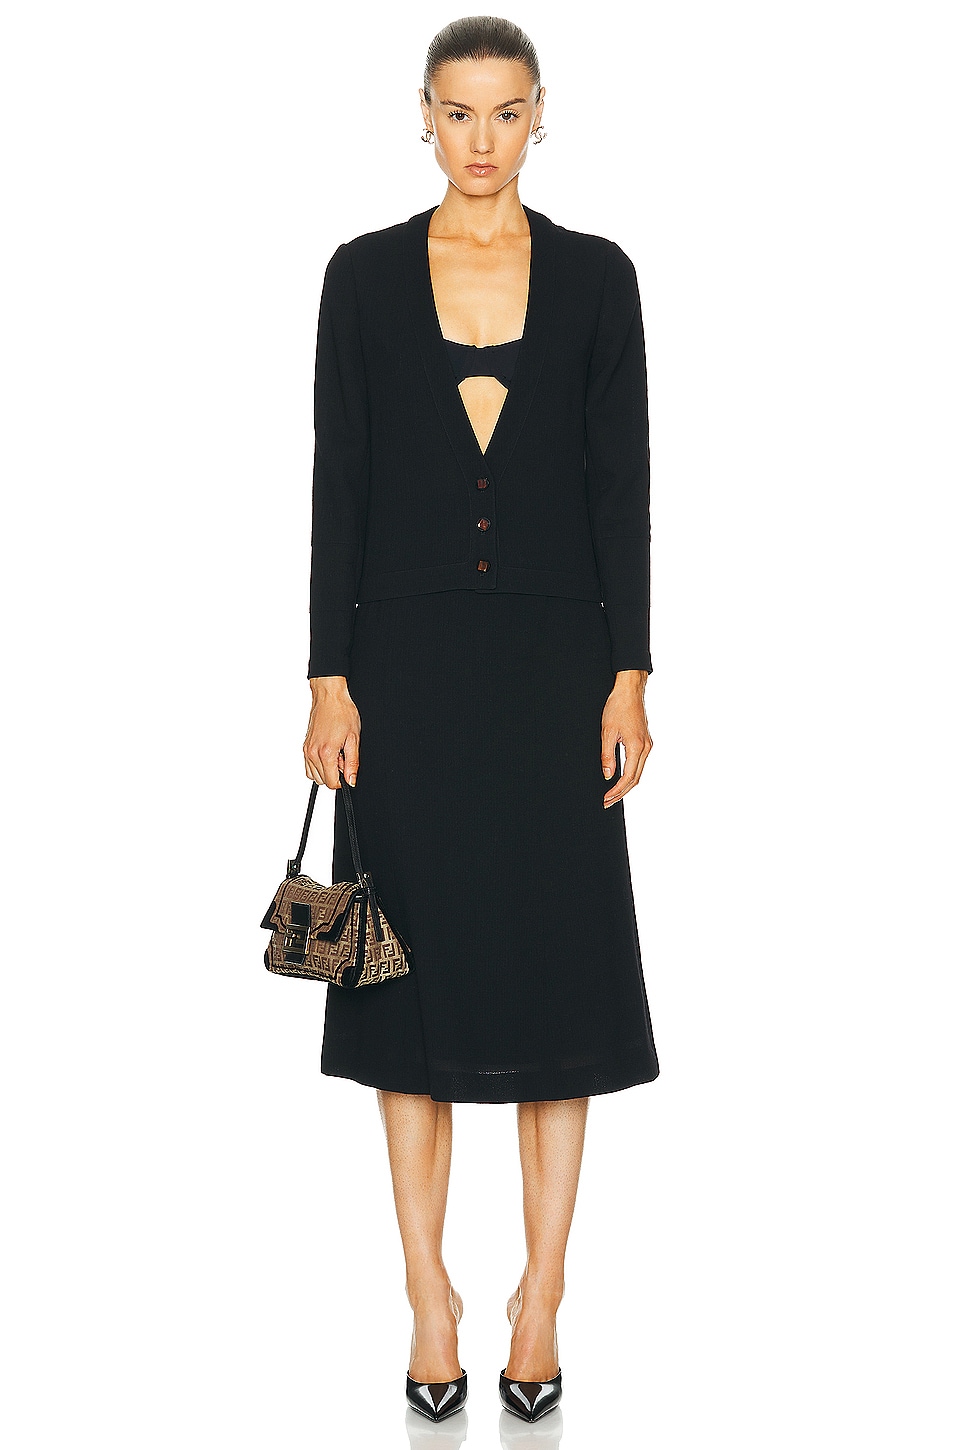 Image 1 of FWRD Renew Chanel Cardigan & Skirt Set in Black